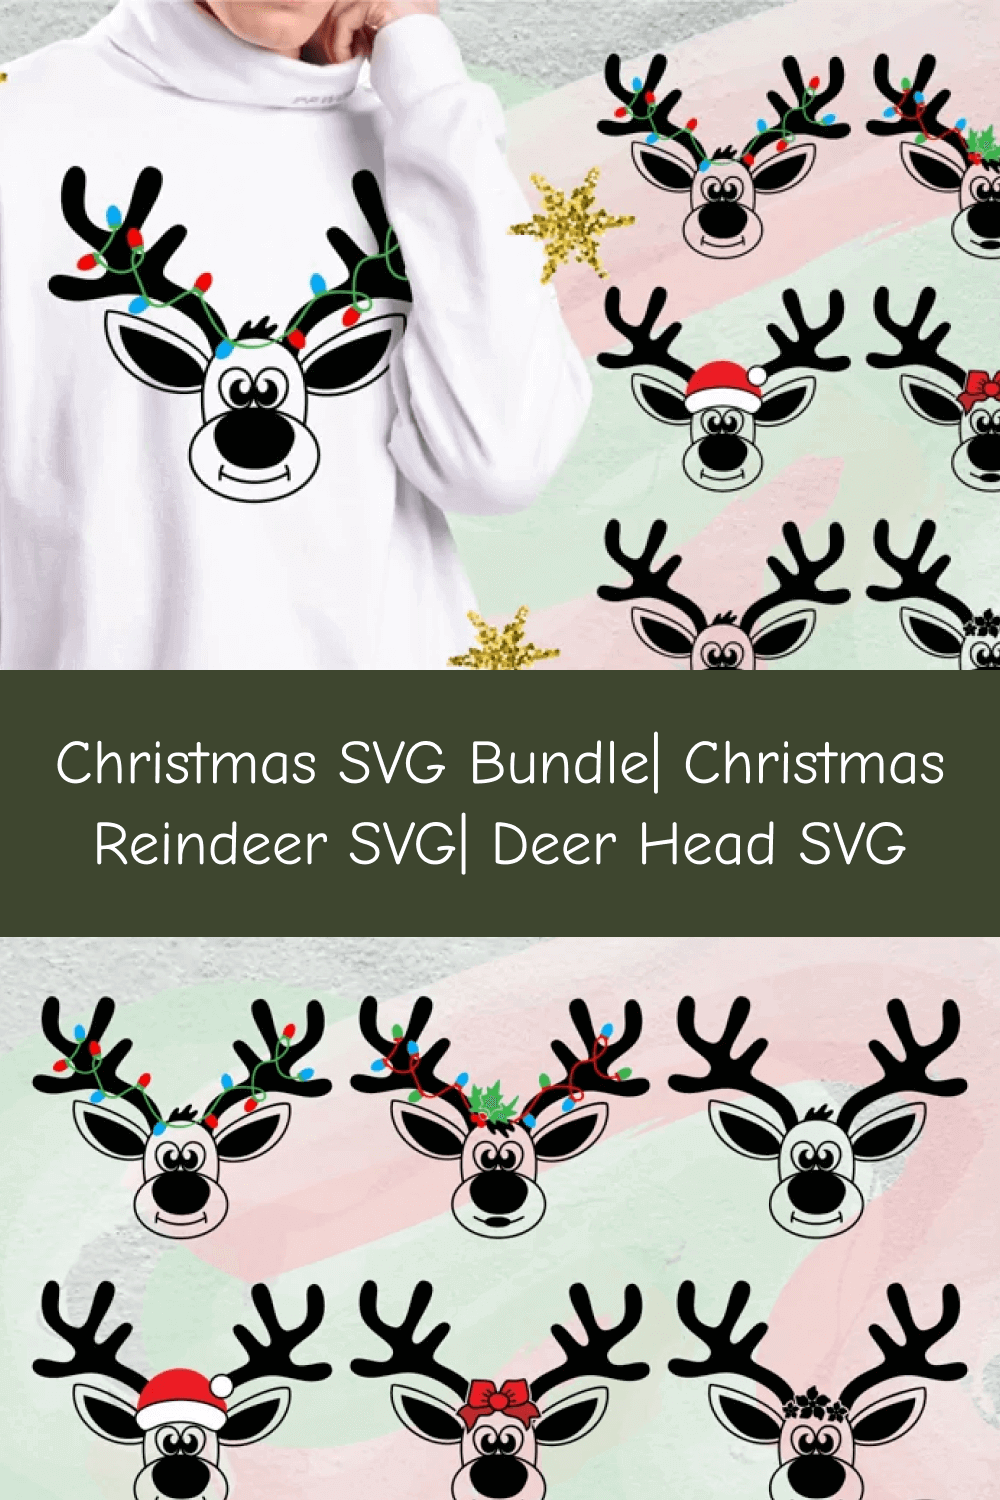 Deer Head SVG.